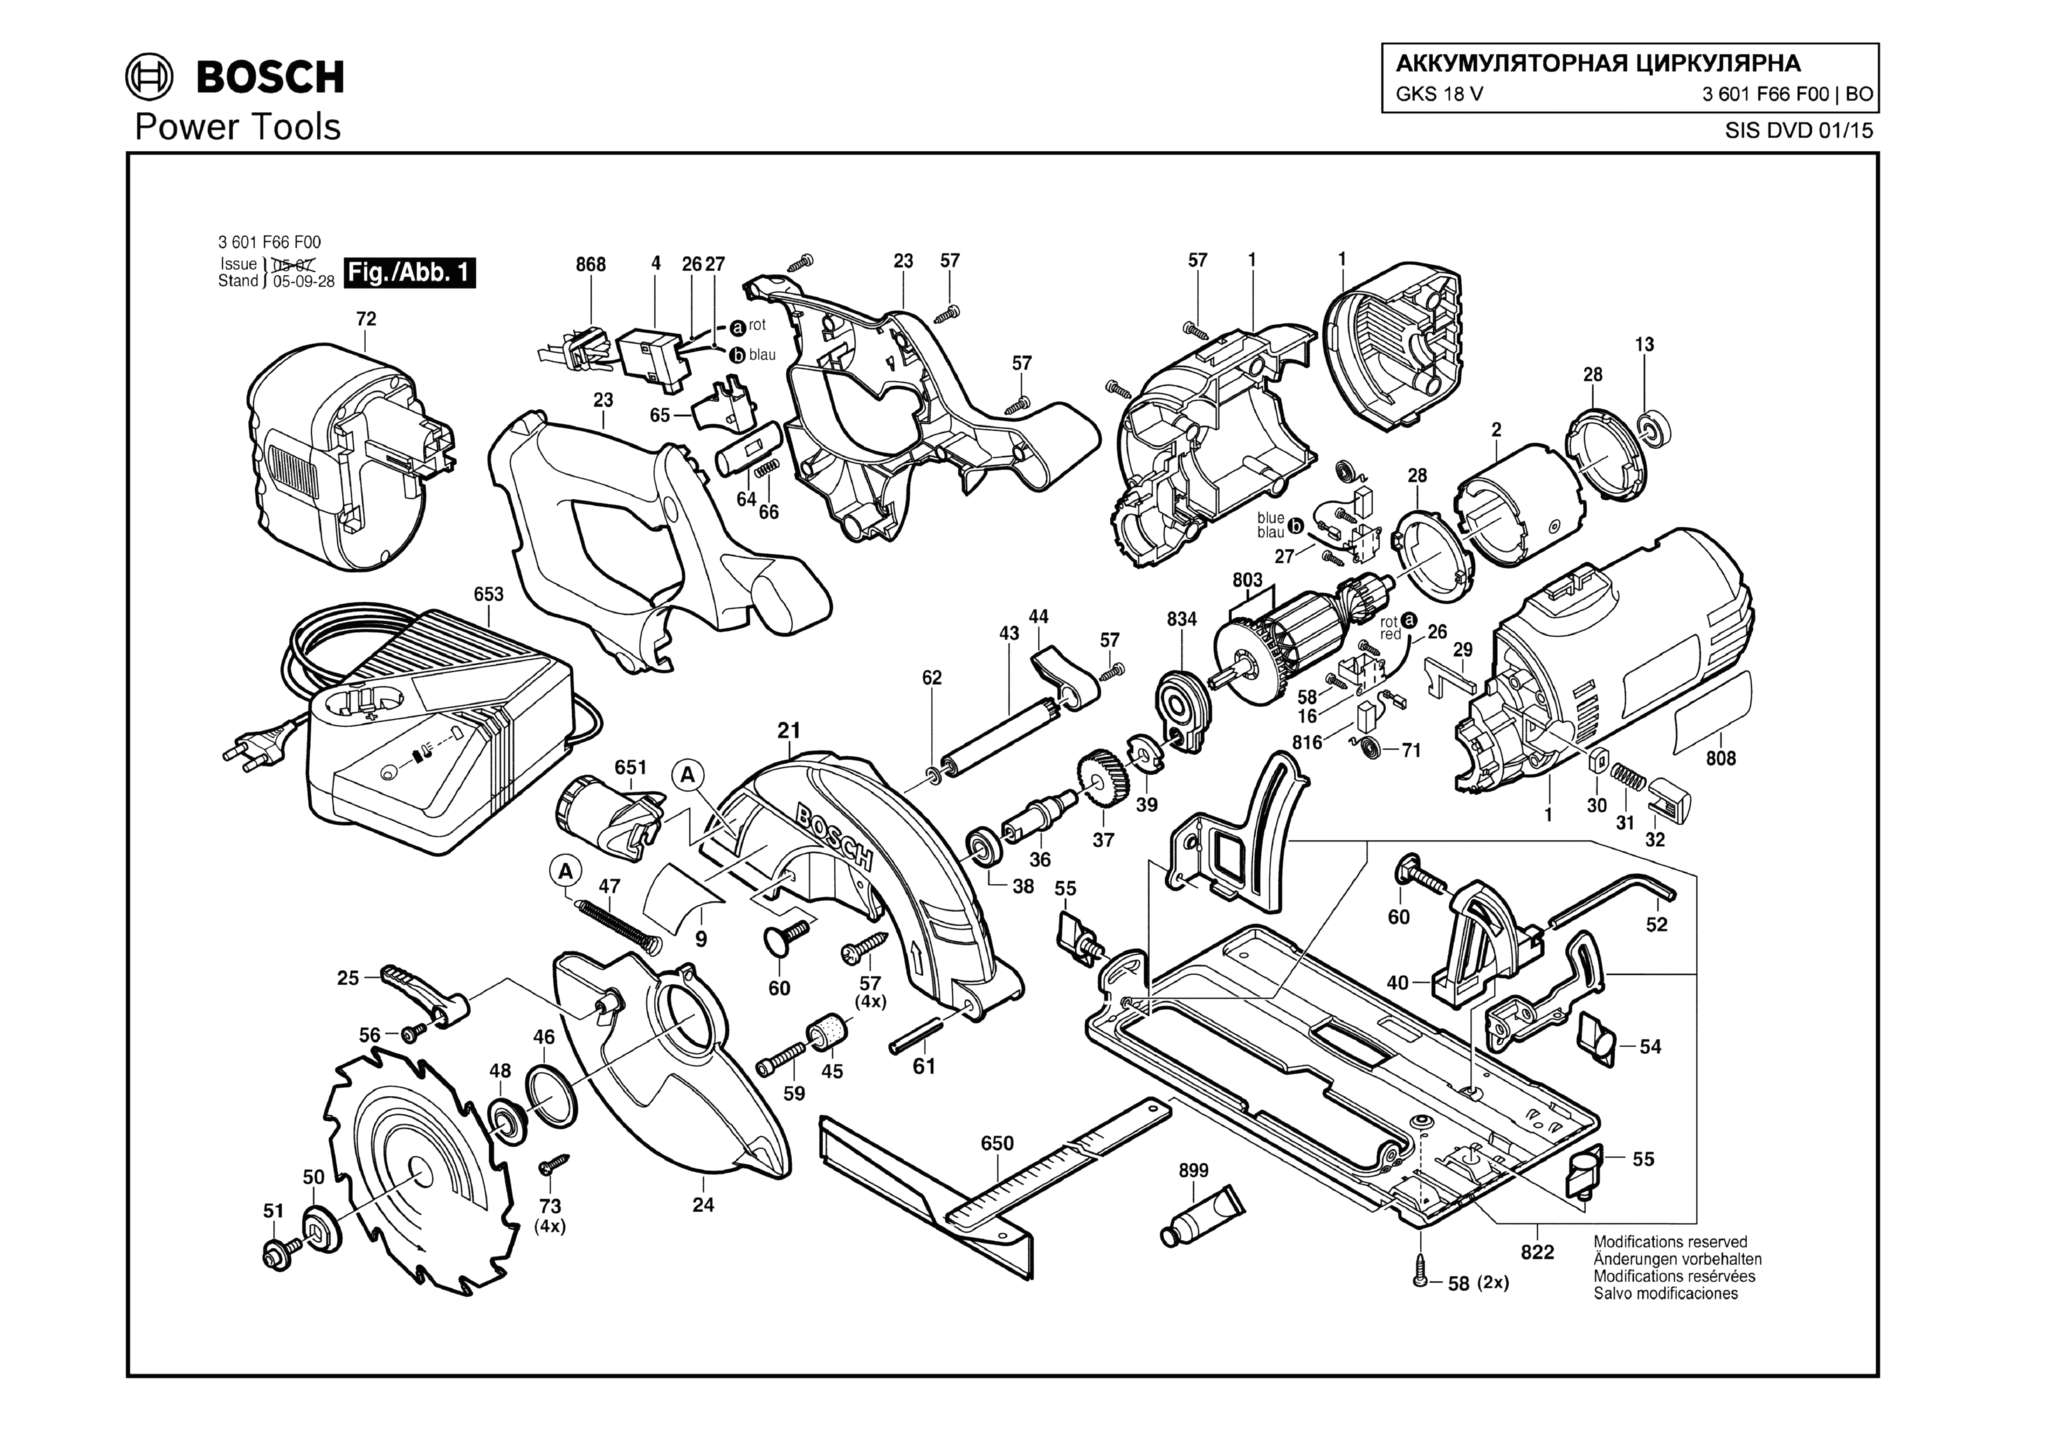 Запчасти, схема и деталировка Bosch GKS 18 V (ТИП 3601F66F00)